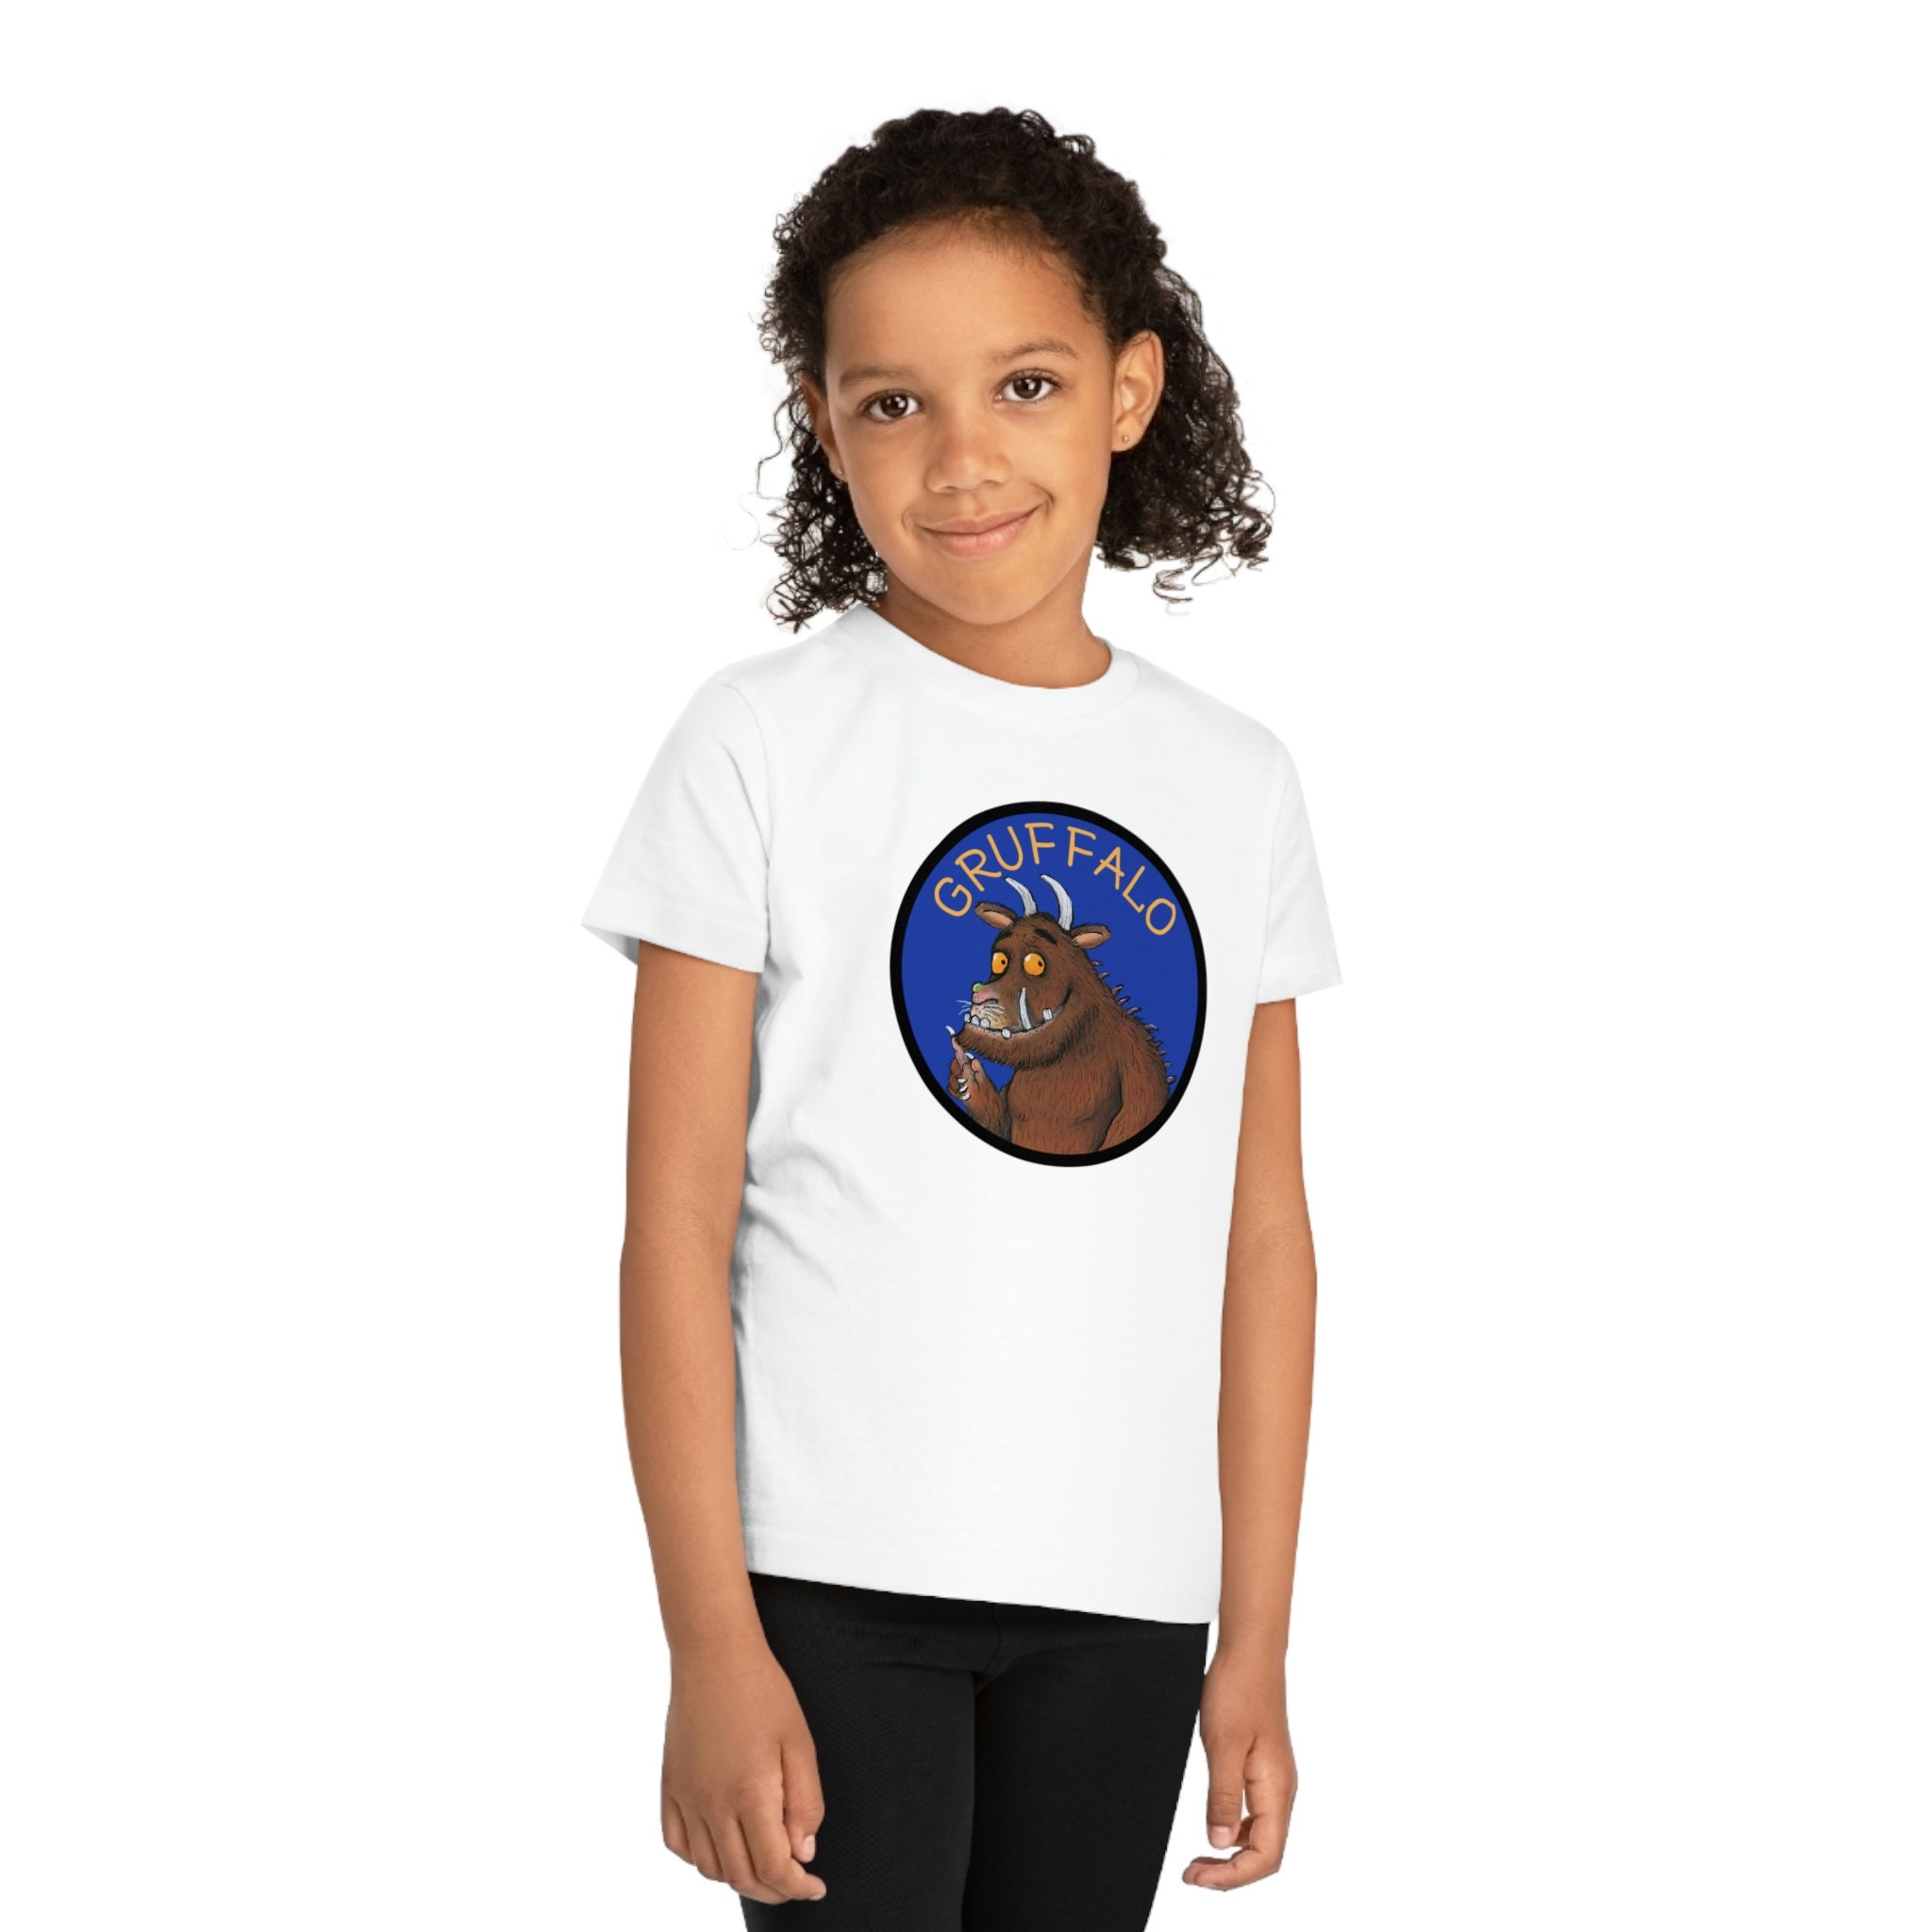 The Cartoon Kids' T-shirt - Etsy